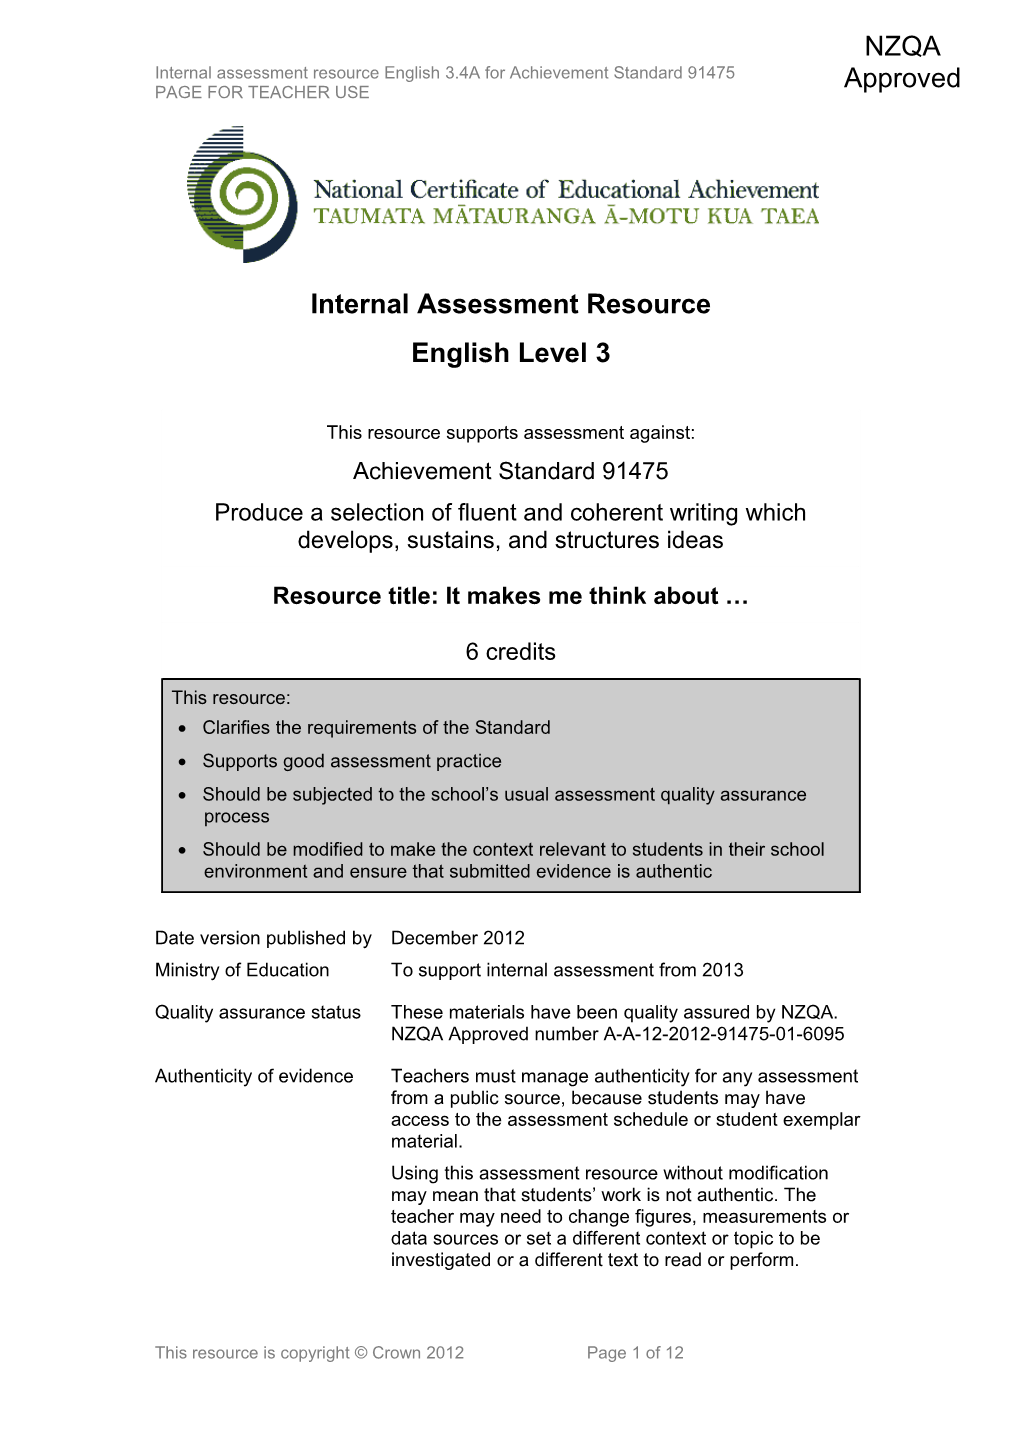 Level 3 English Internal Assessment Resource